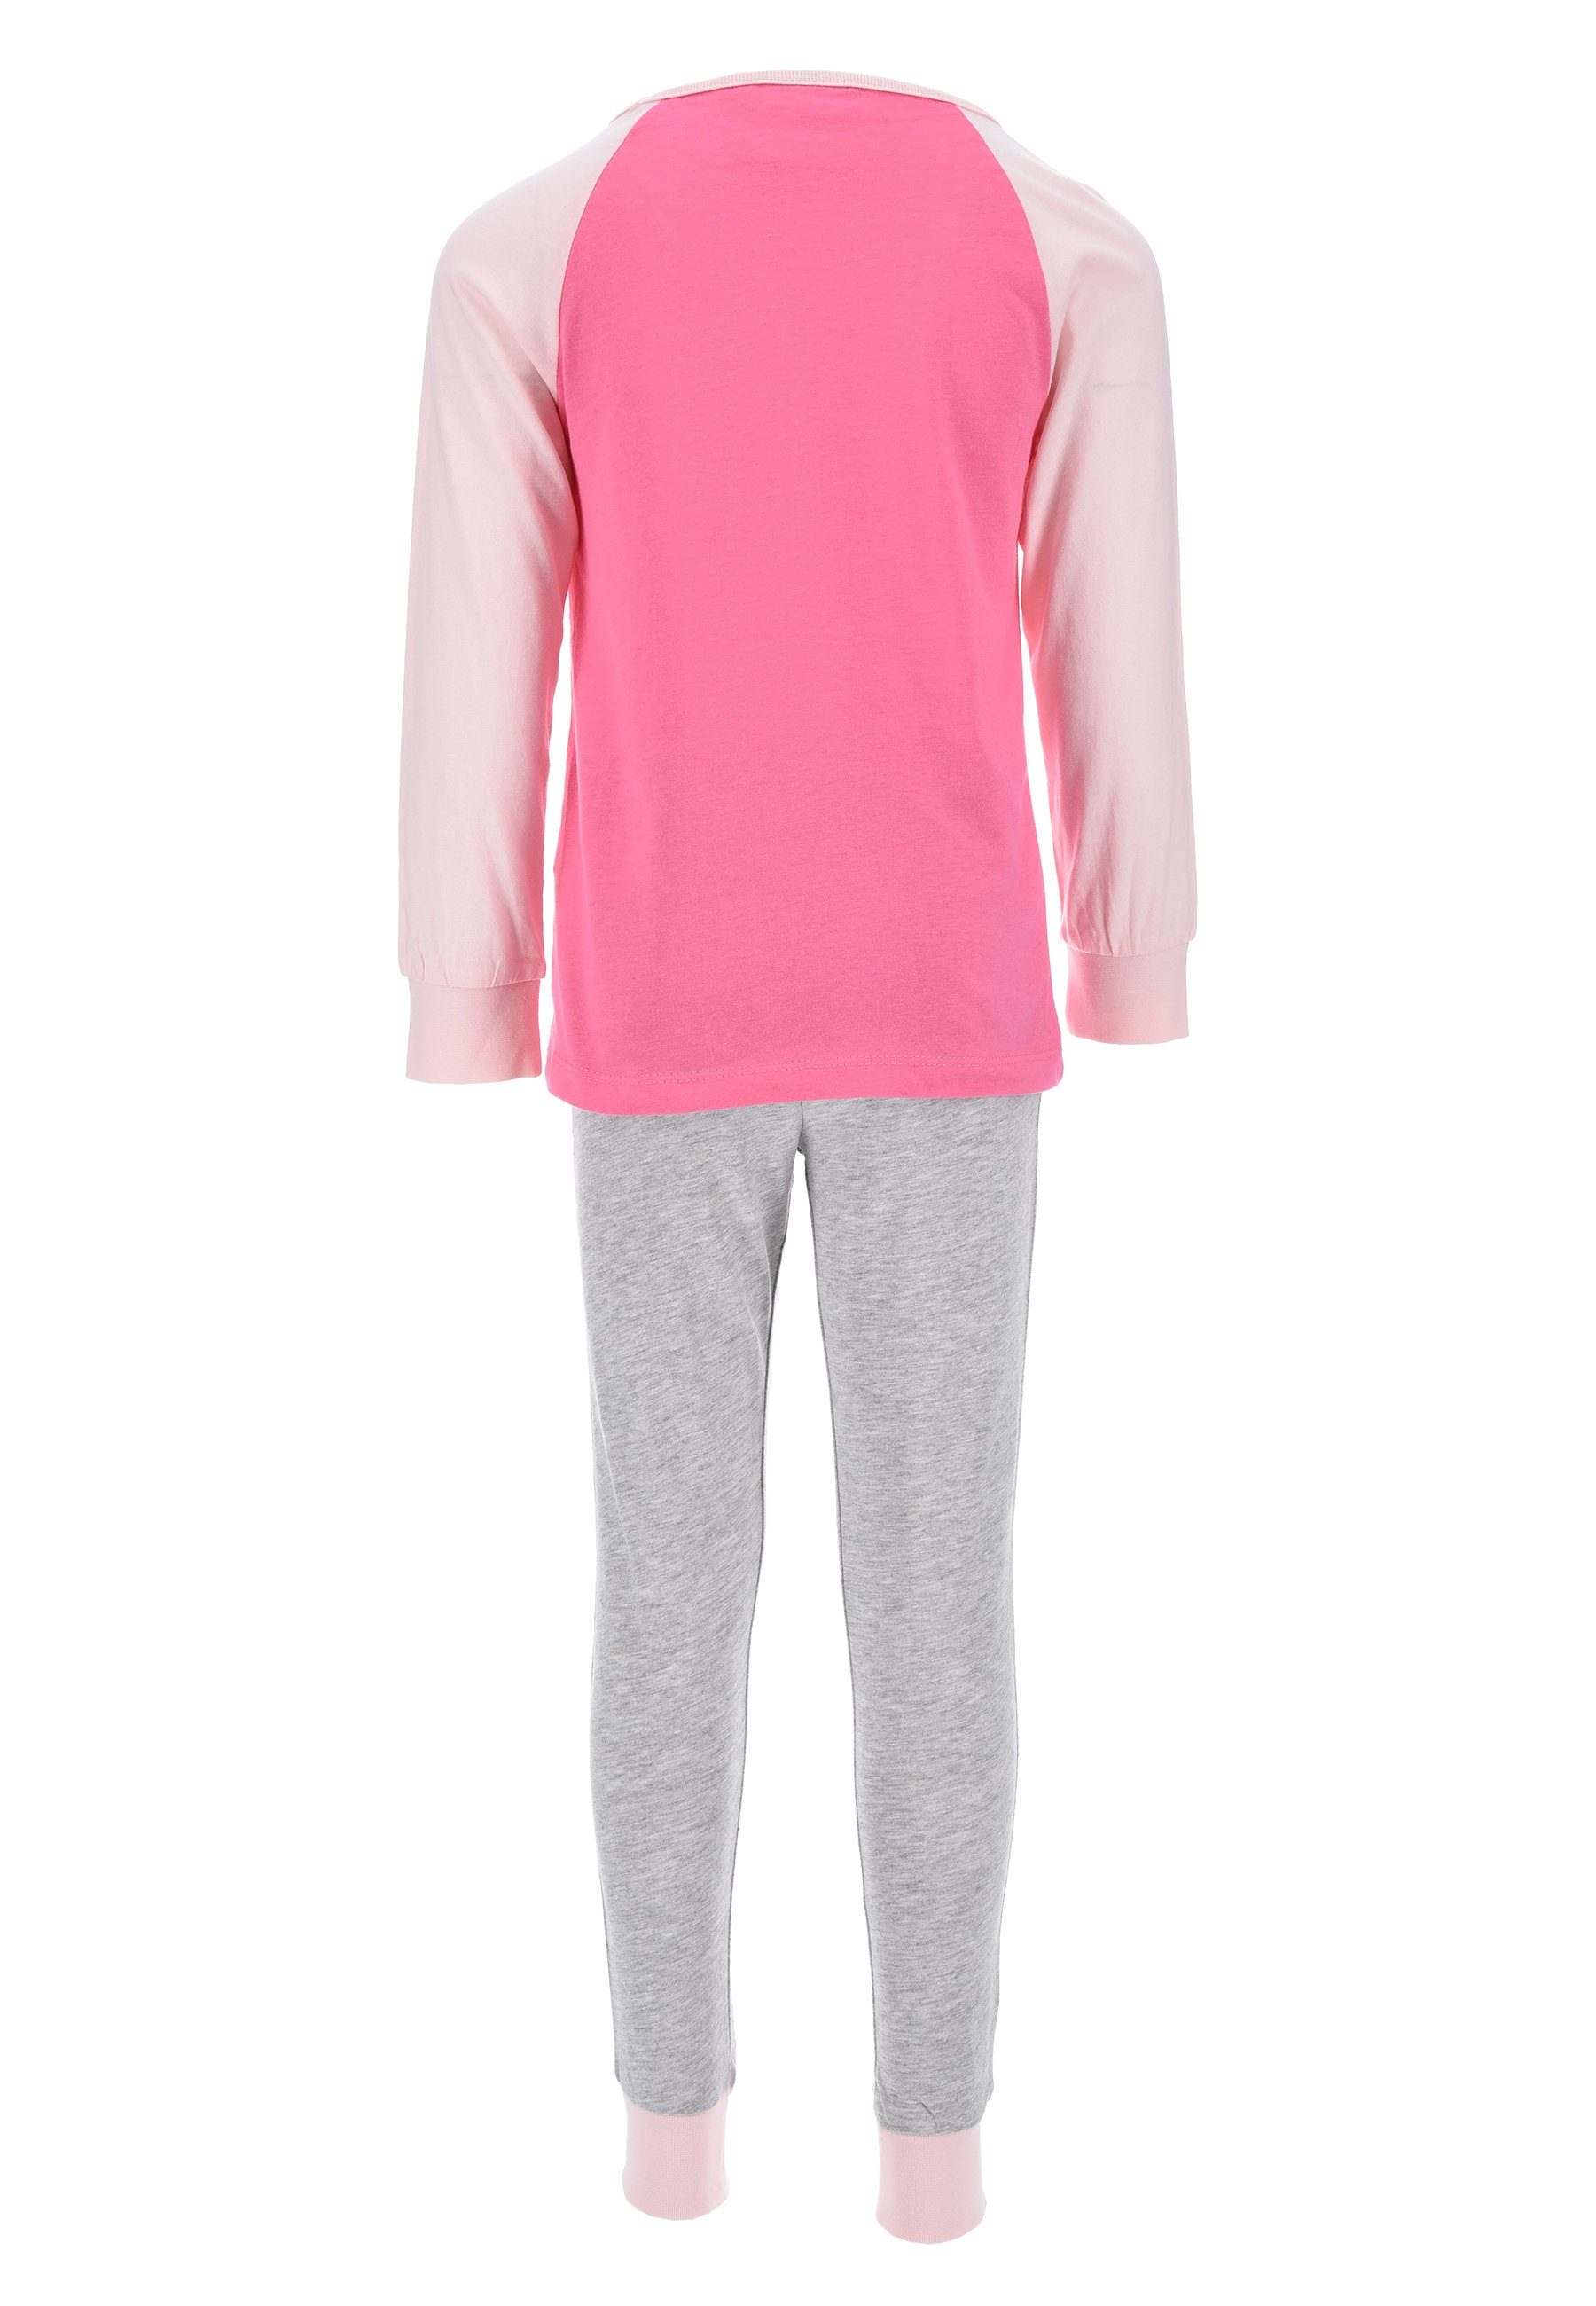 PAW PATROL Schlafanzug Pyjama Mädchen Schlafanzug Langarm Kinder Schlaf-Hose tlg) (2 Pink Shirt + Kinder